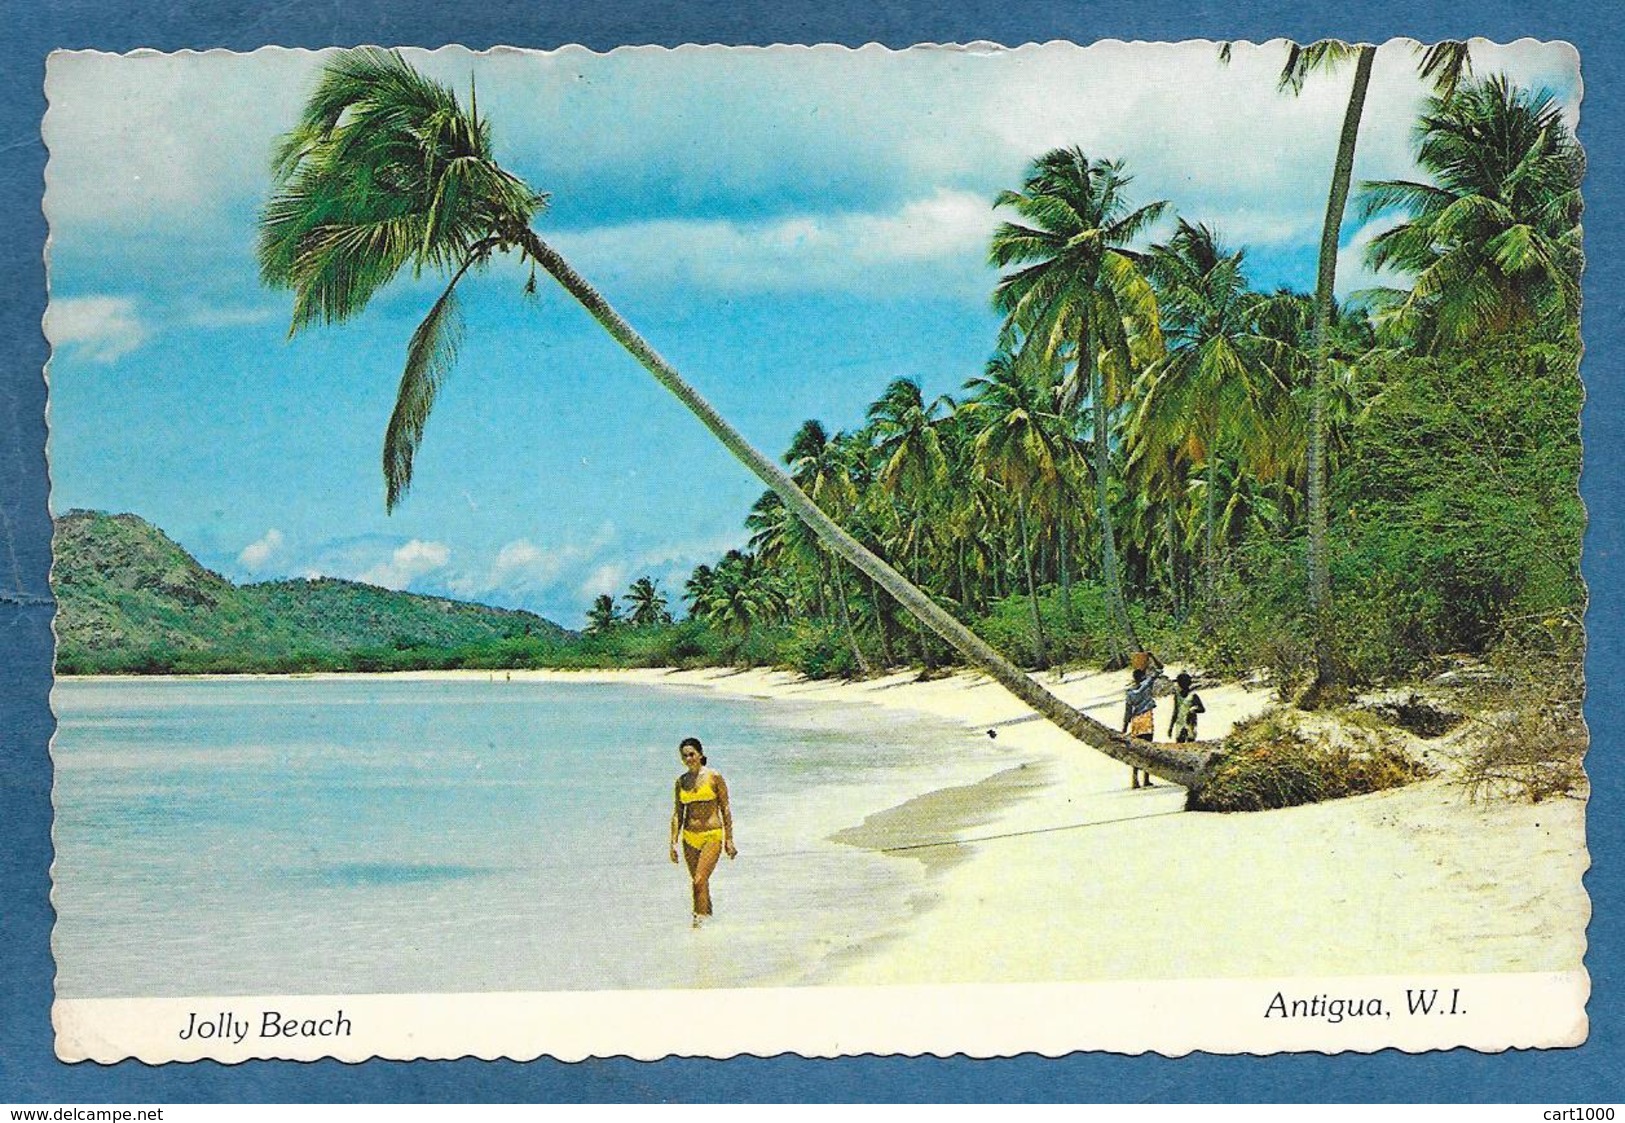 ANTIGUA WEST INDIES JOLLY BEACH 1982 - Antigua & Barbuda